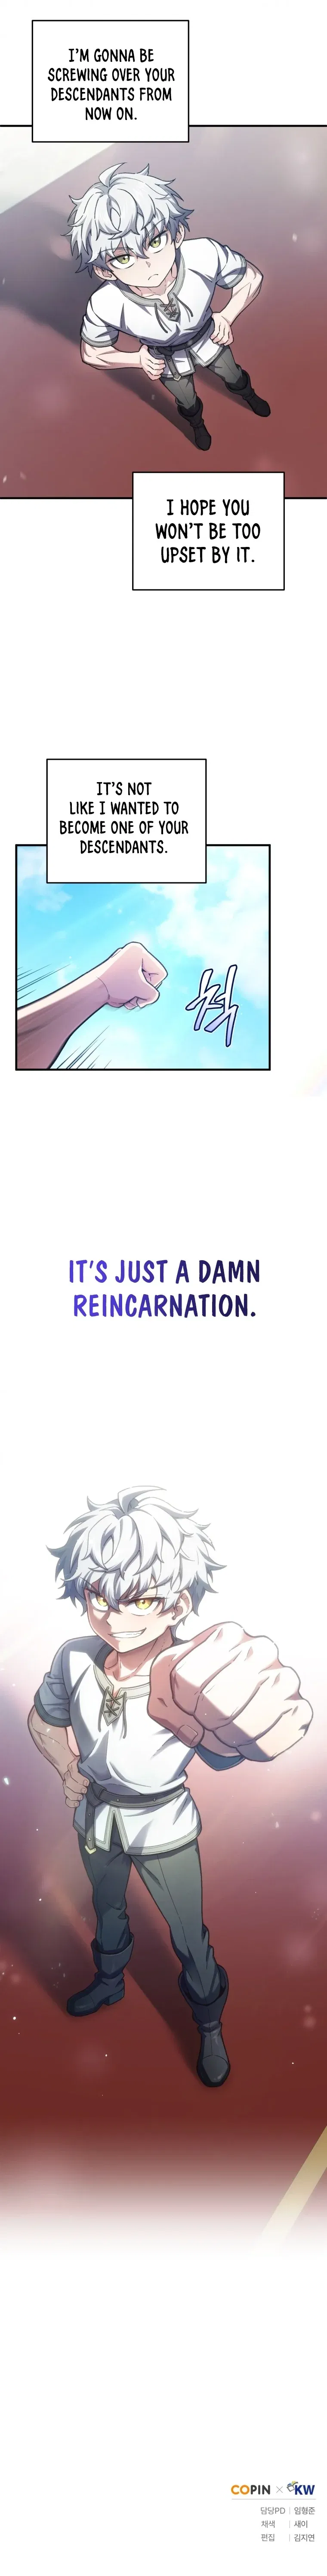 Damn Reincarnation Chapter 4 page 12